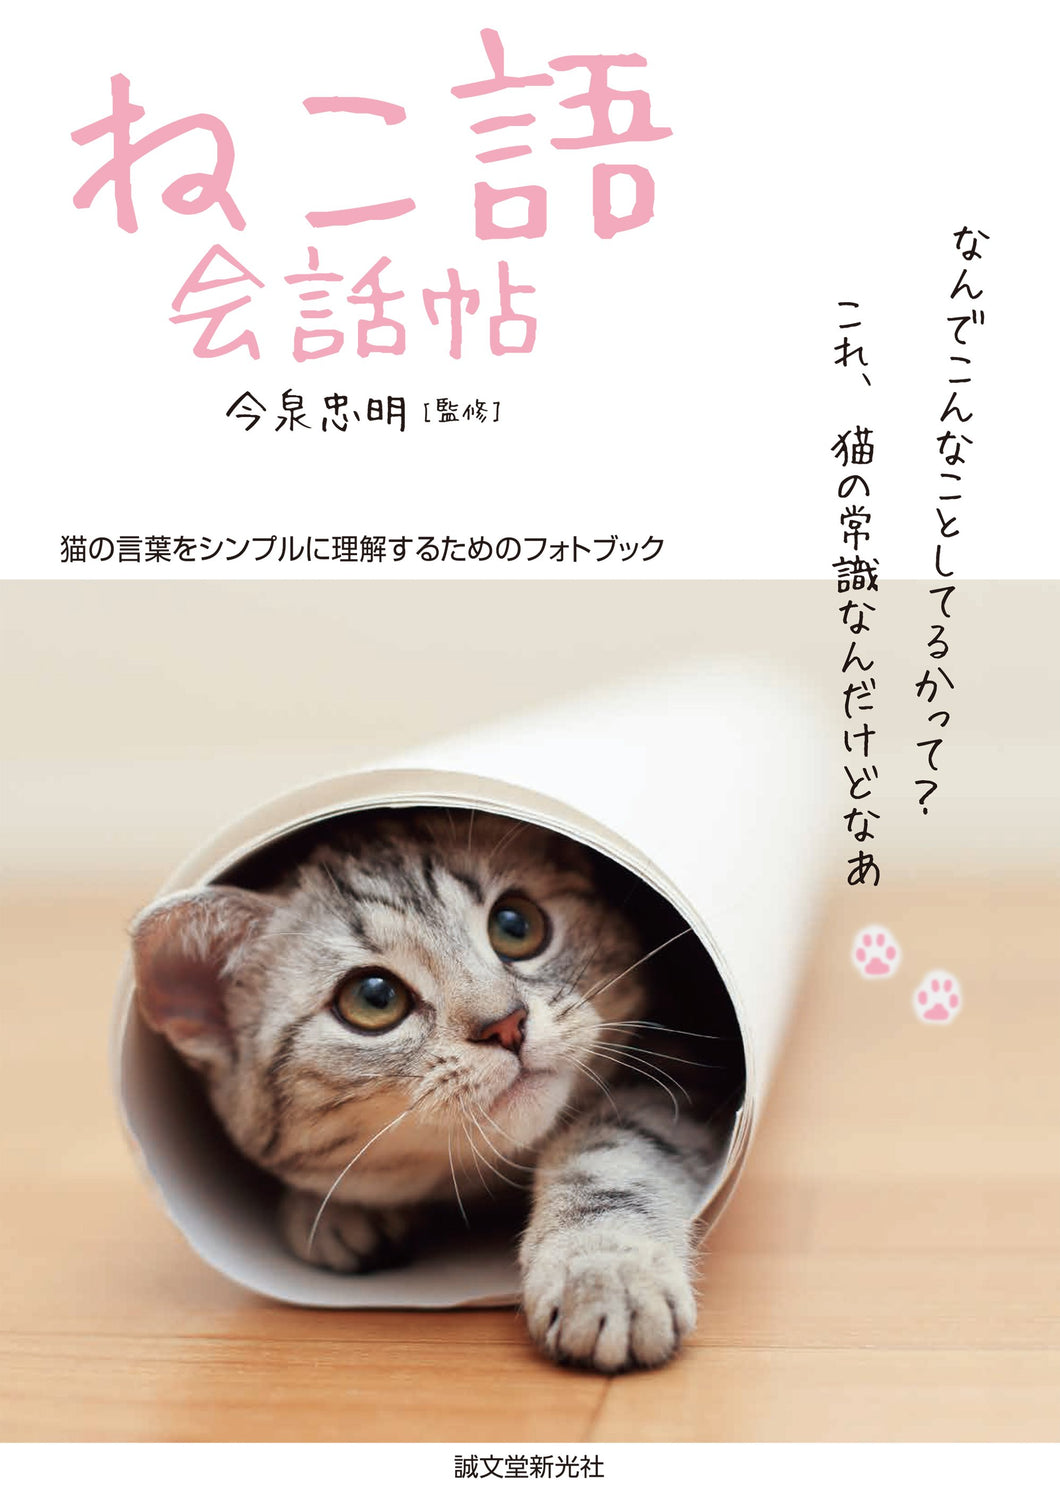 Cat language conversation book